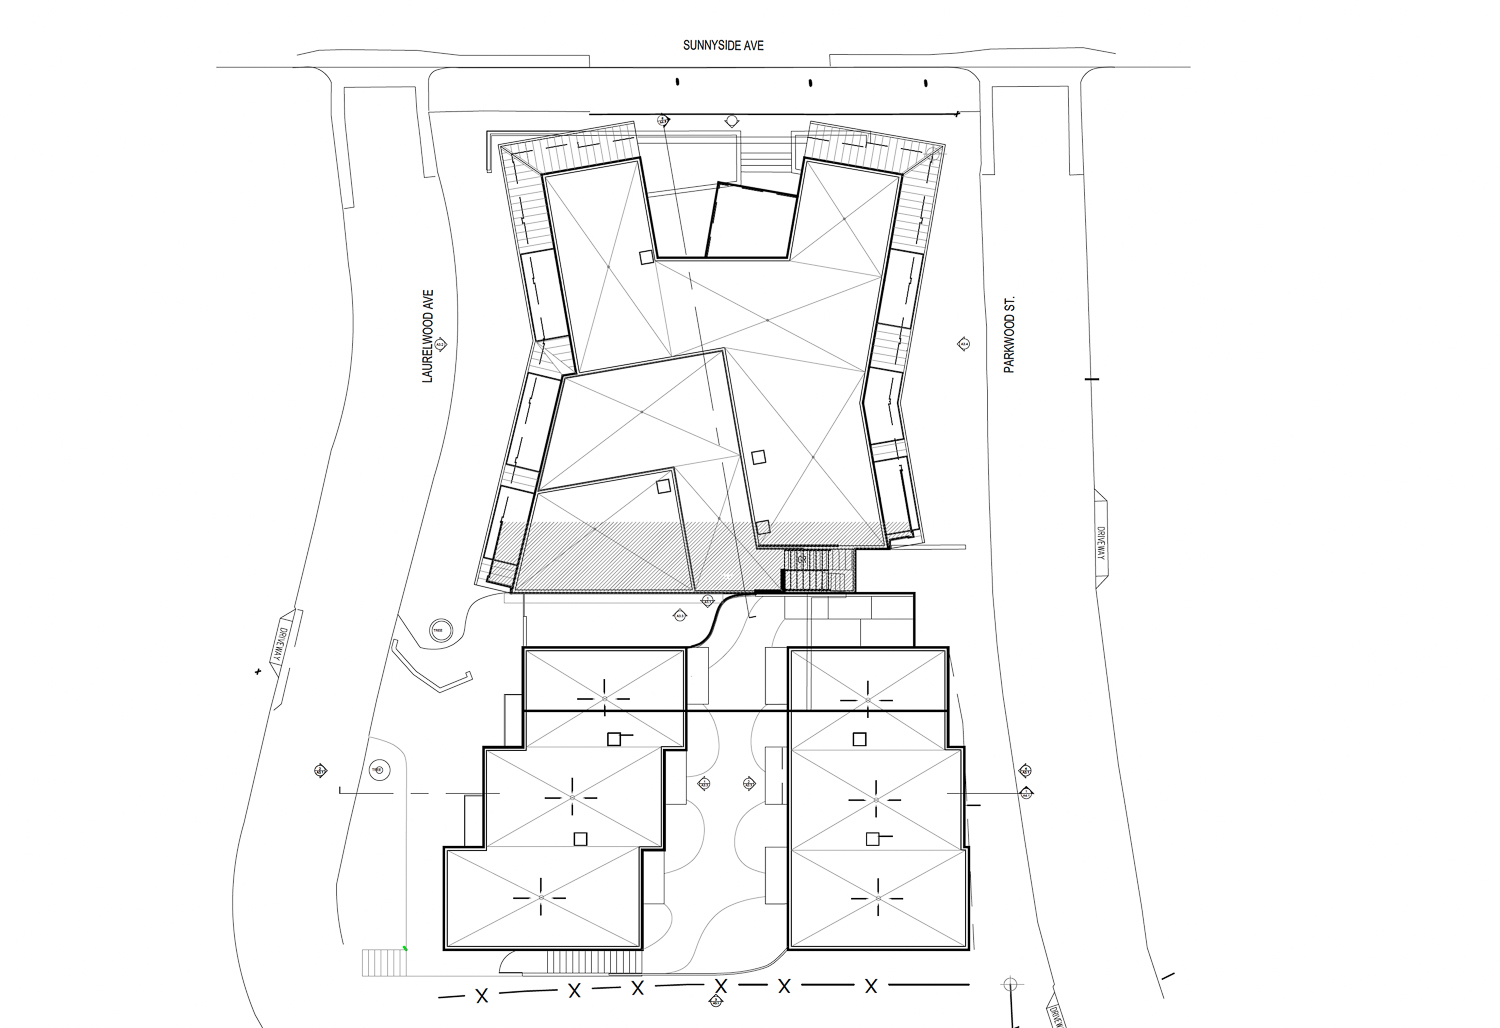 20 Sunnyside Avenue site map, illustration by Geiszler Architects